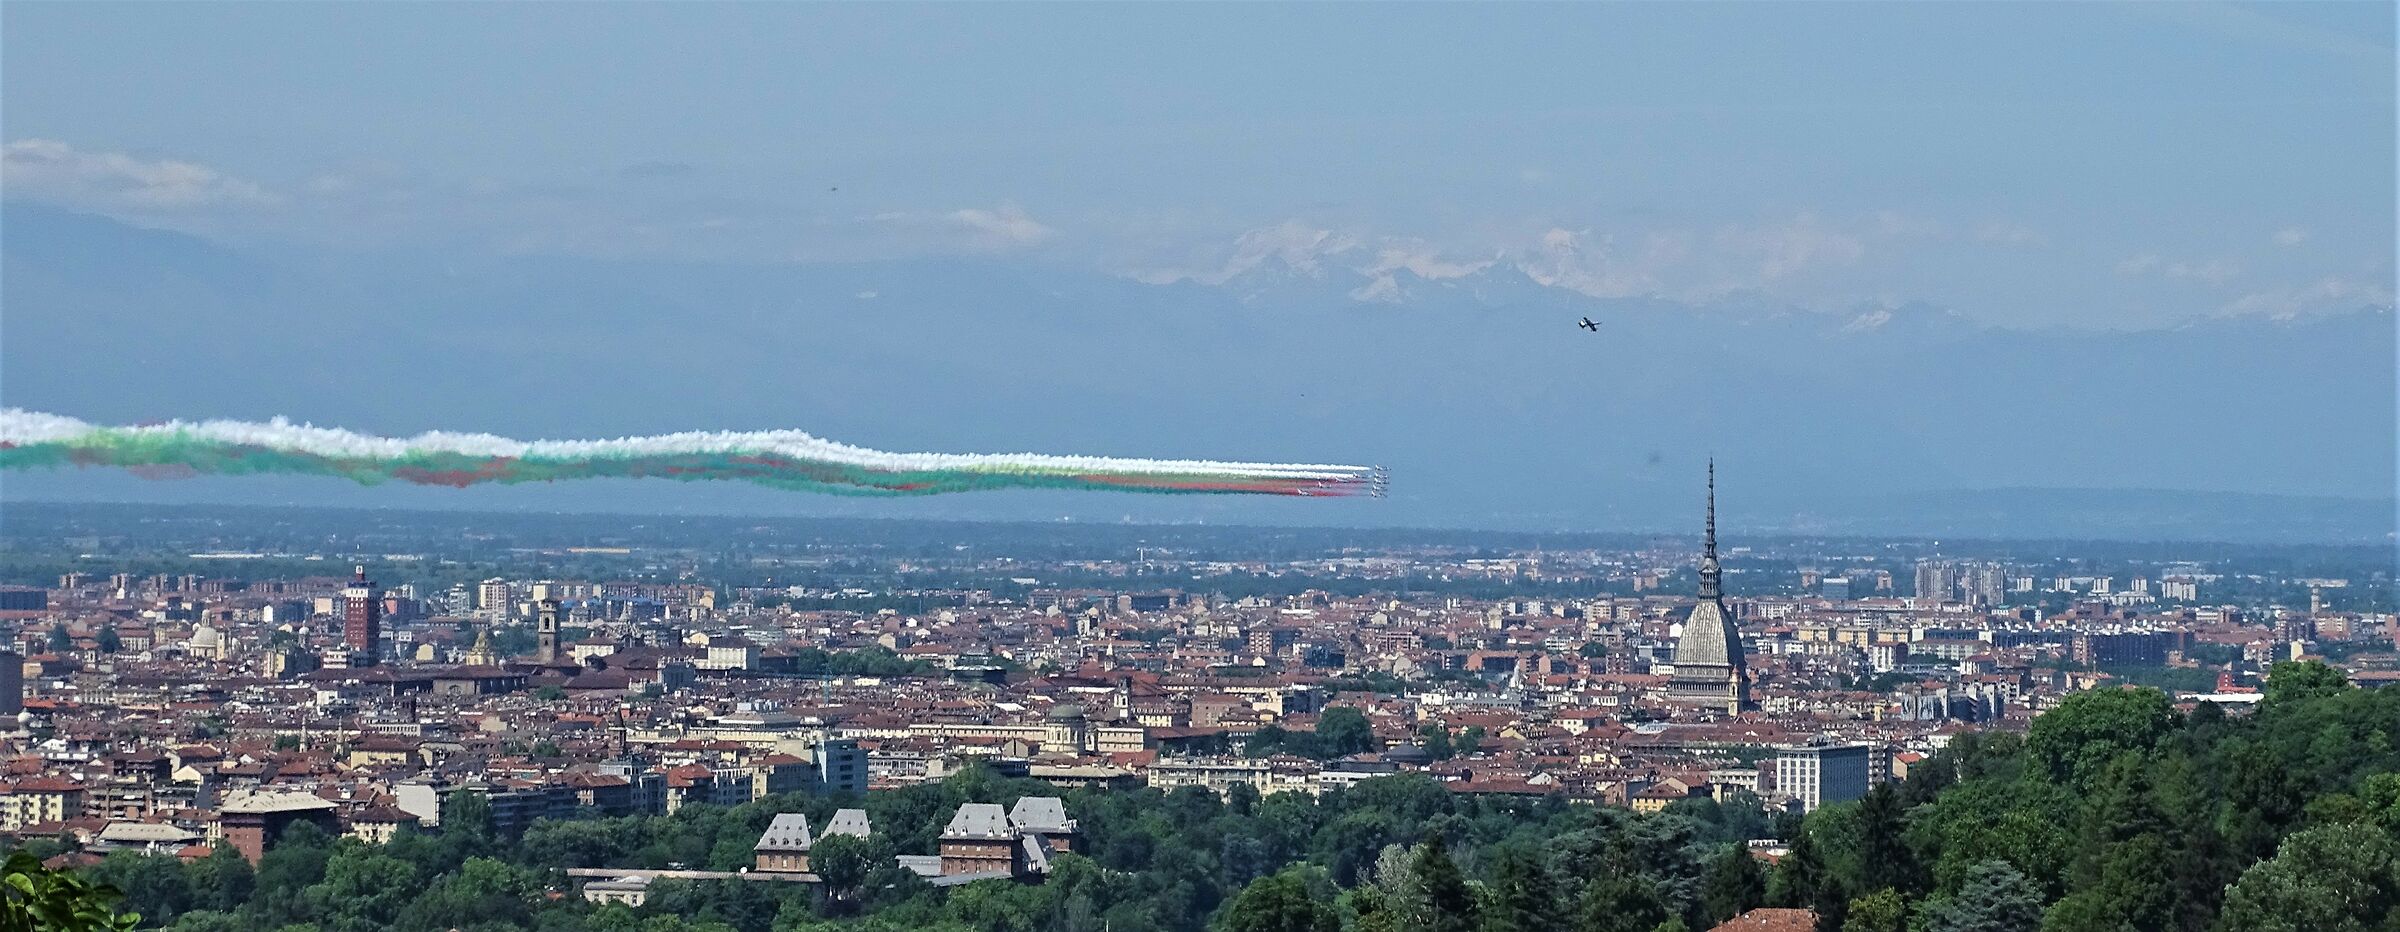 tricolour arrows over Turin 25-05-2020...